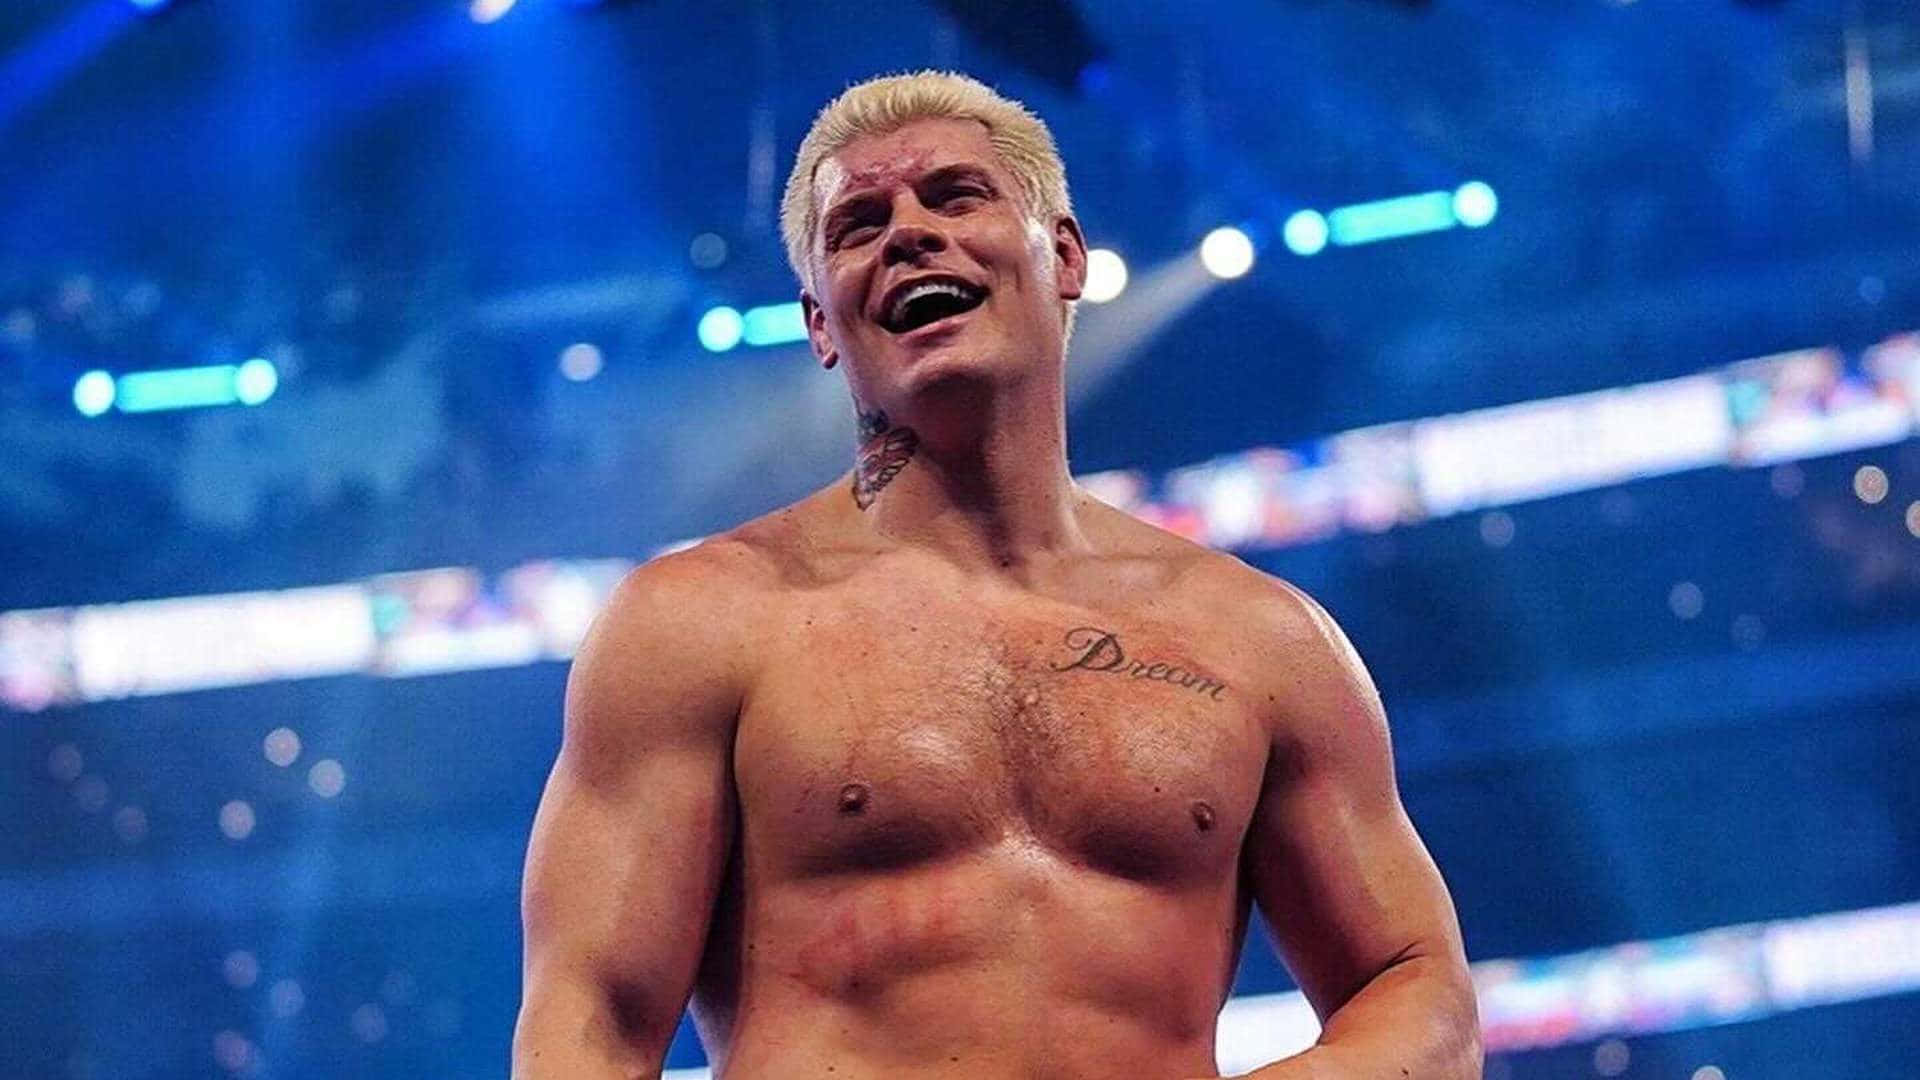 Wwe Wrestler Cody Rhodes Topless Wallpaper